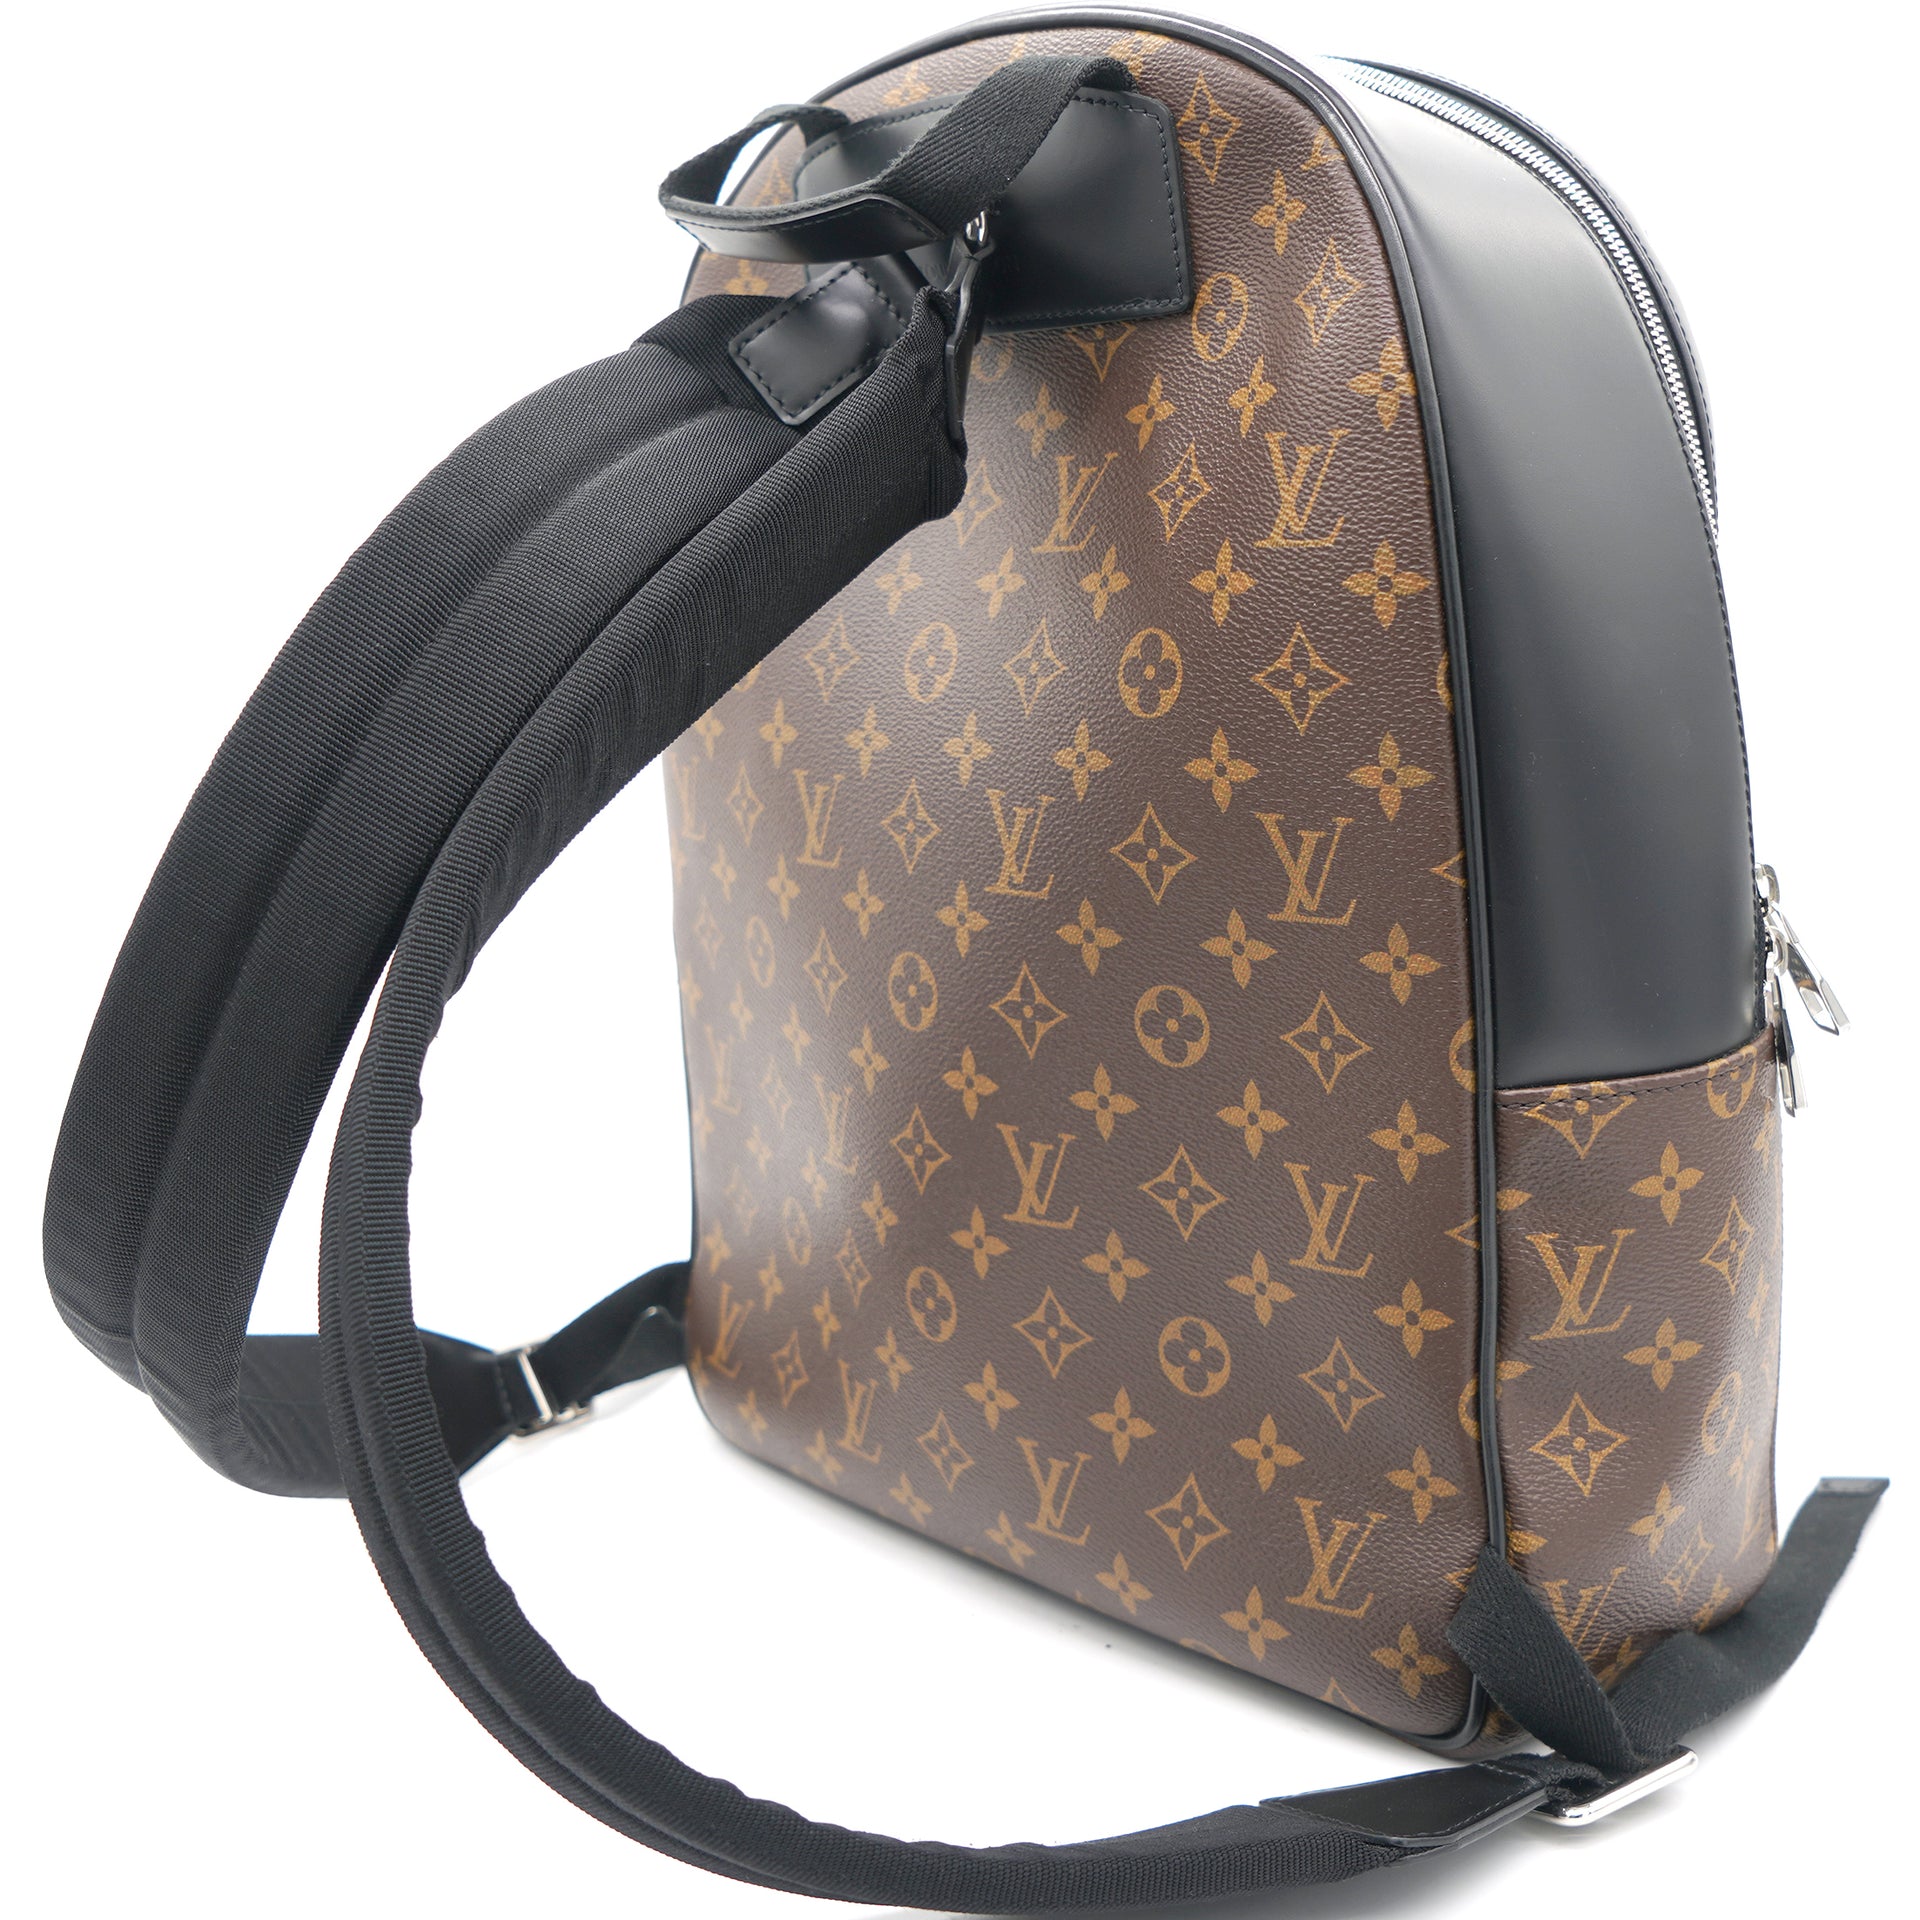 Louis Vuitton Josh Macassar Monogram Canvas Backpack